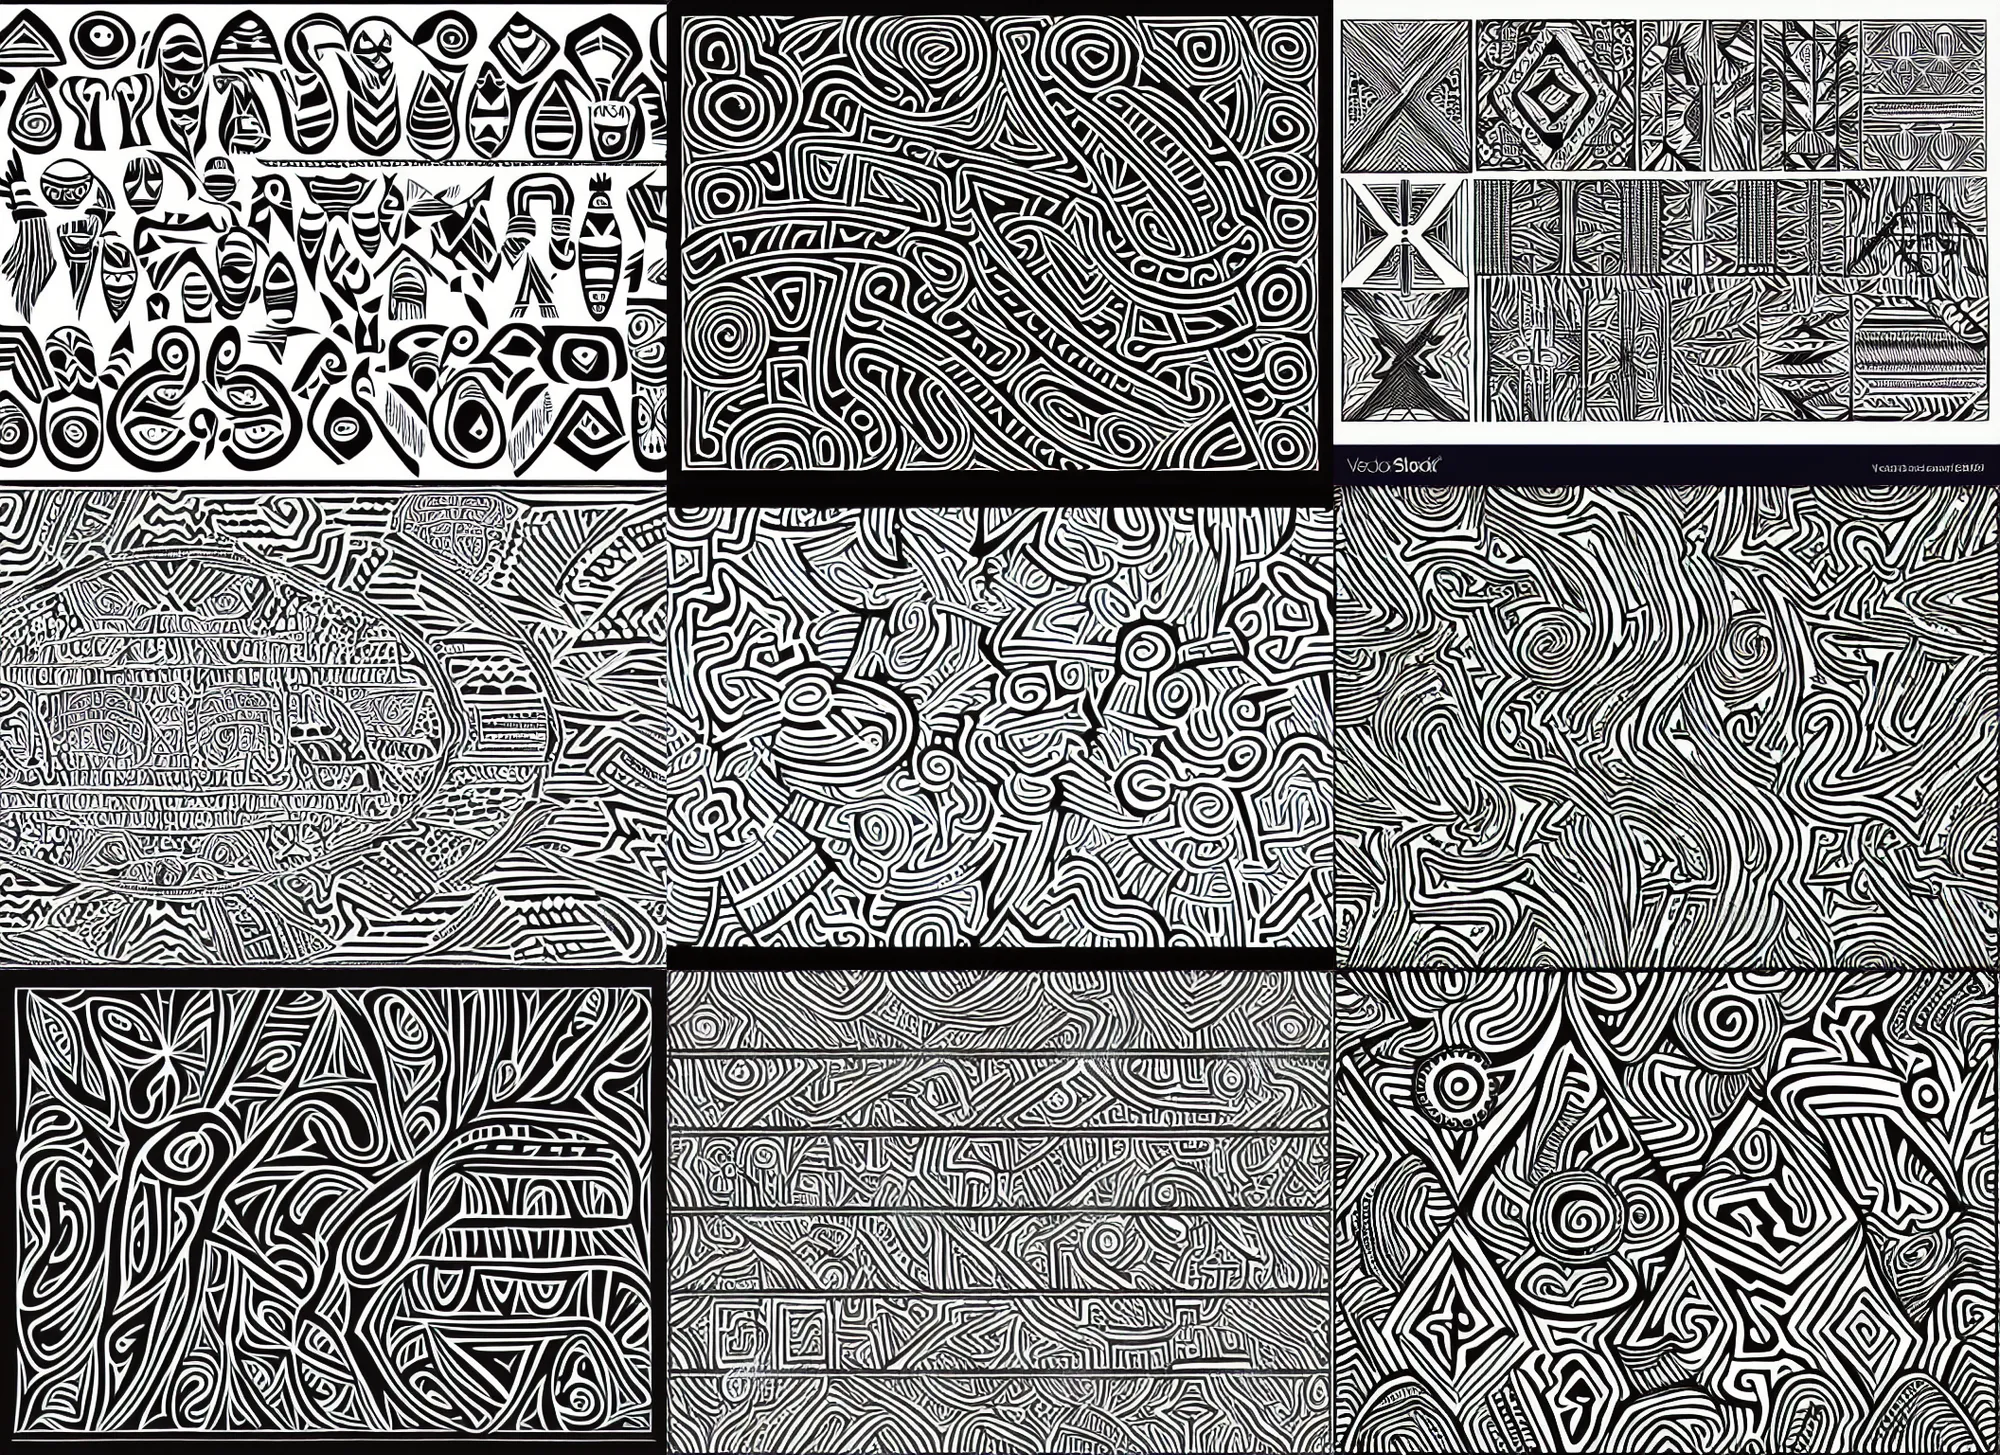 Prompt: decorative tribal aboriginal clean shapes by bauhaus, sprite sheet, b & w, vector